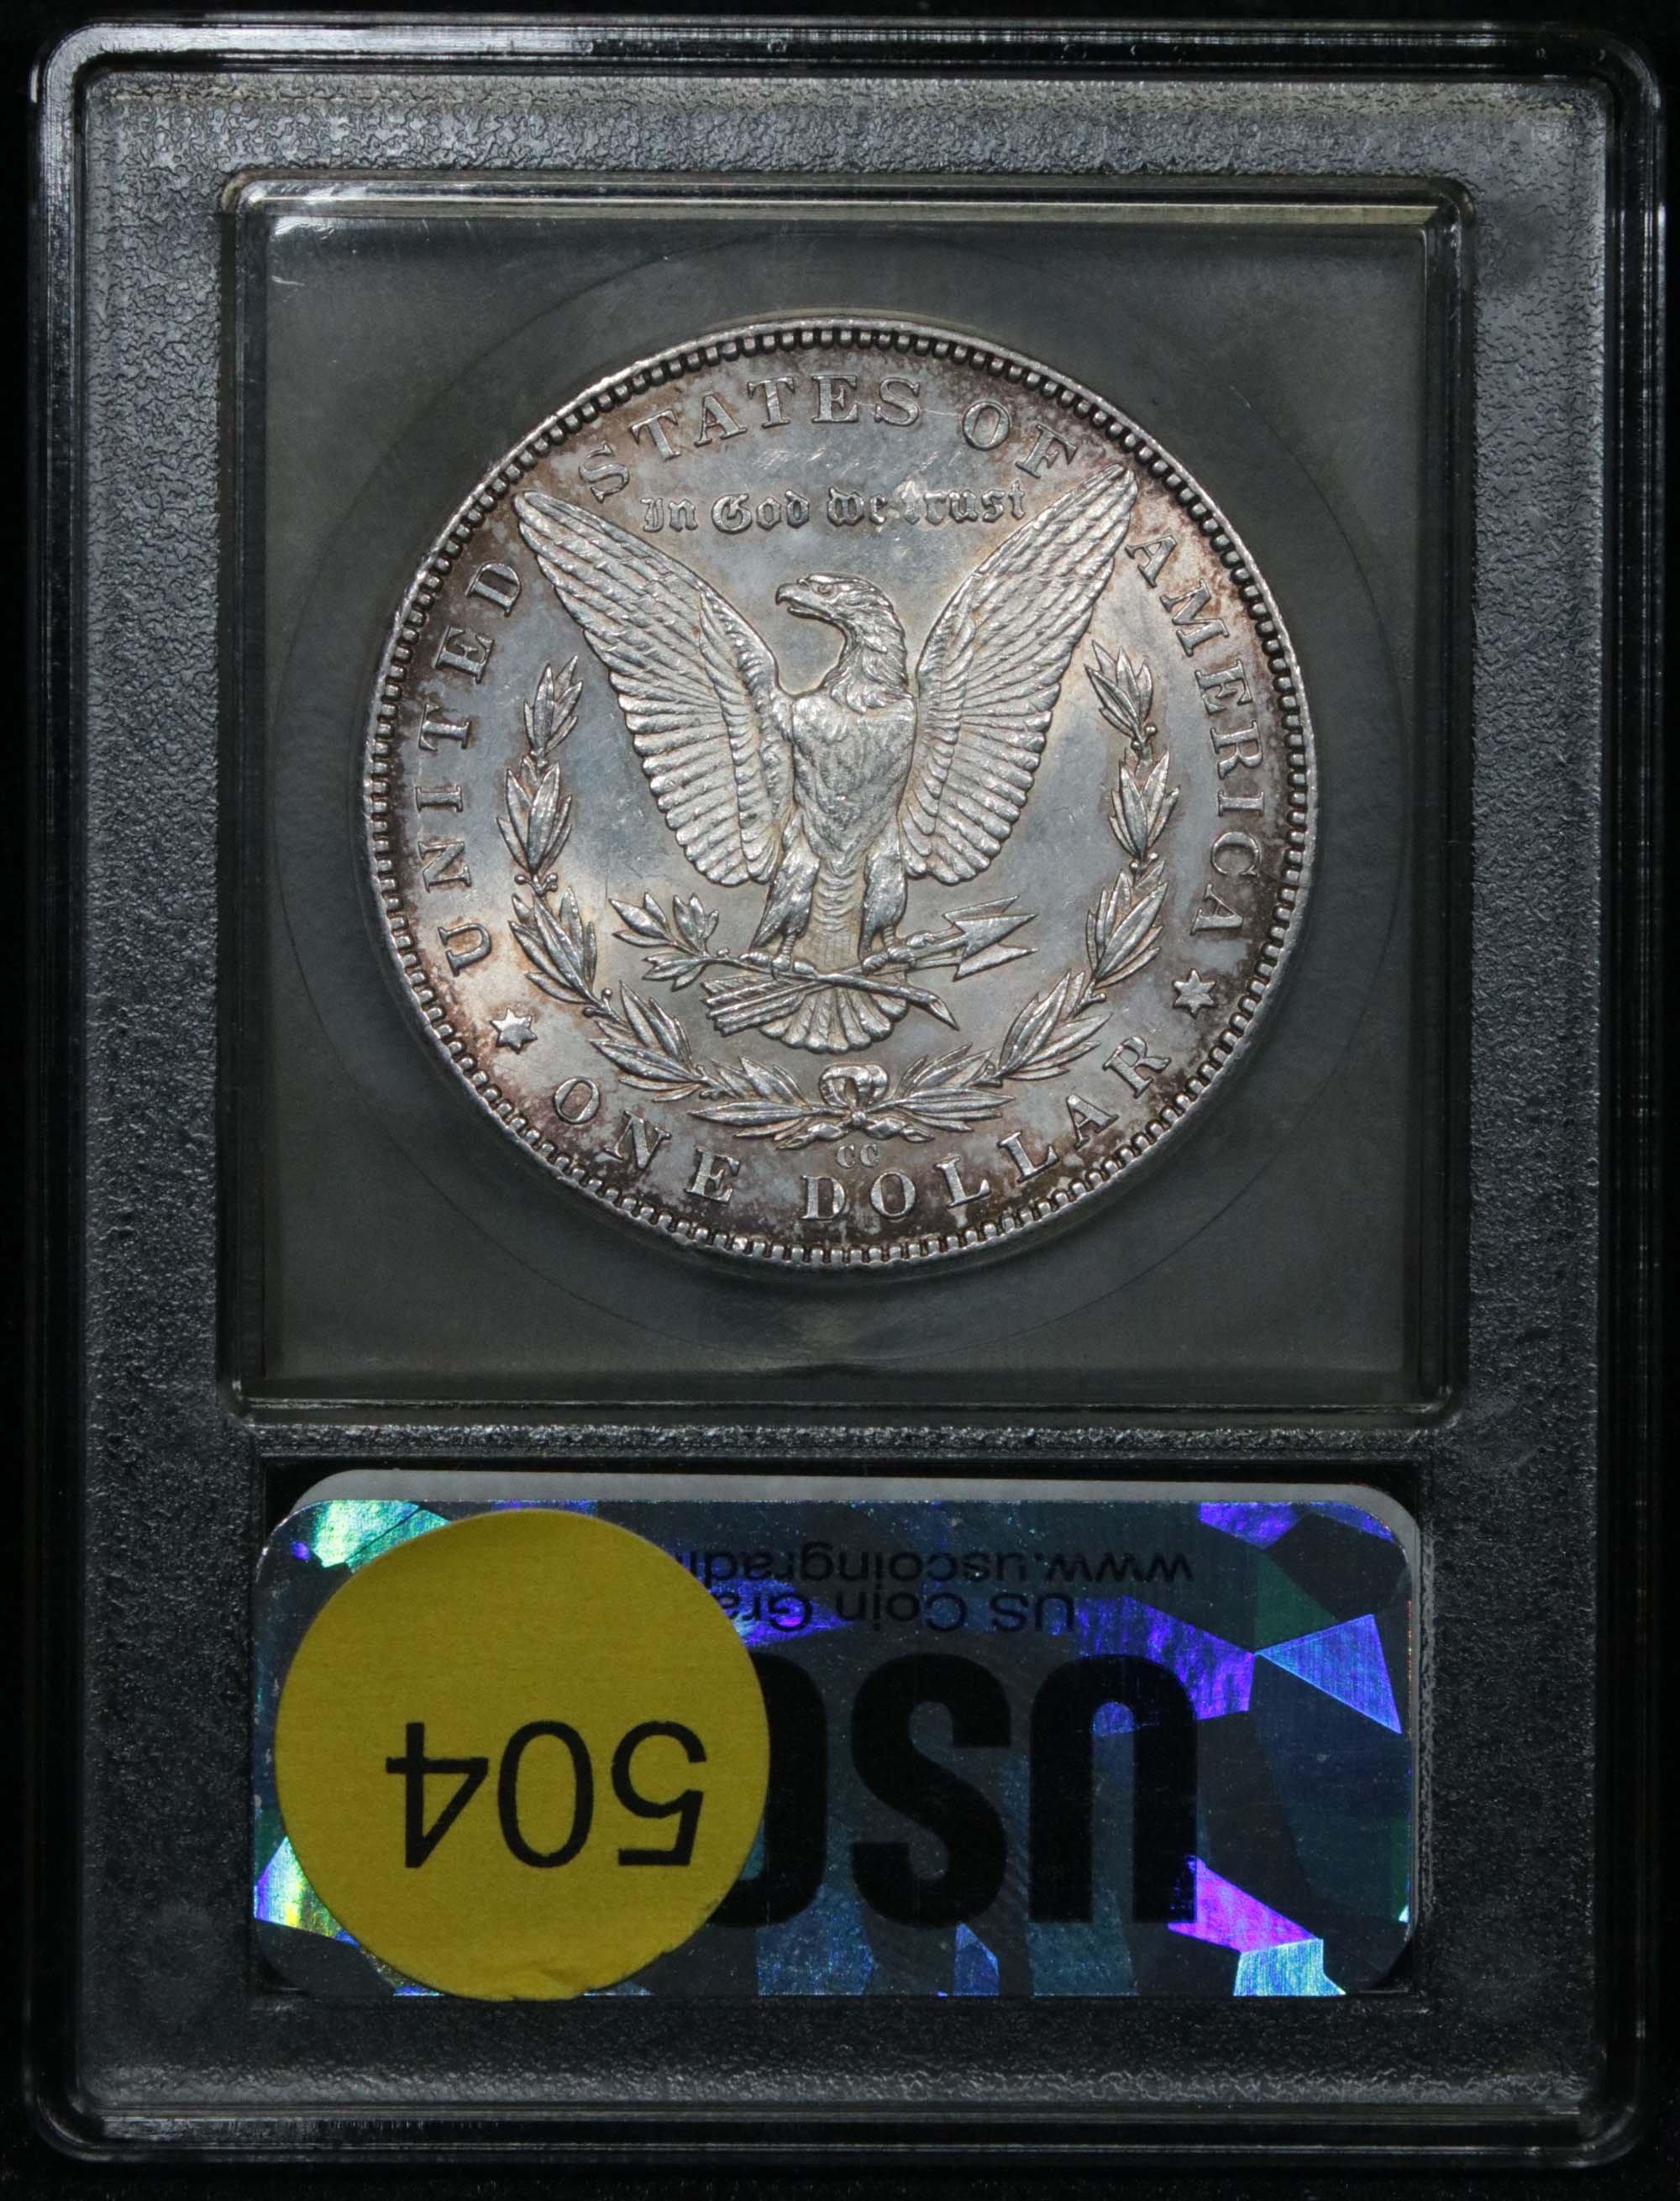 ***Auction Highlight*** 1889-cc Morgan Dollar $1 Graded Select+ Unc by USCG (fc)